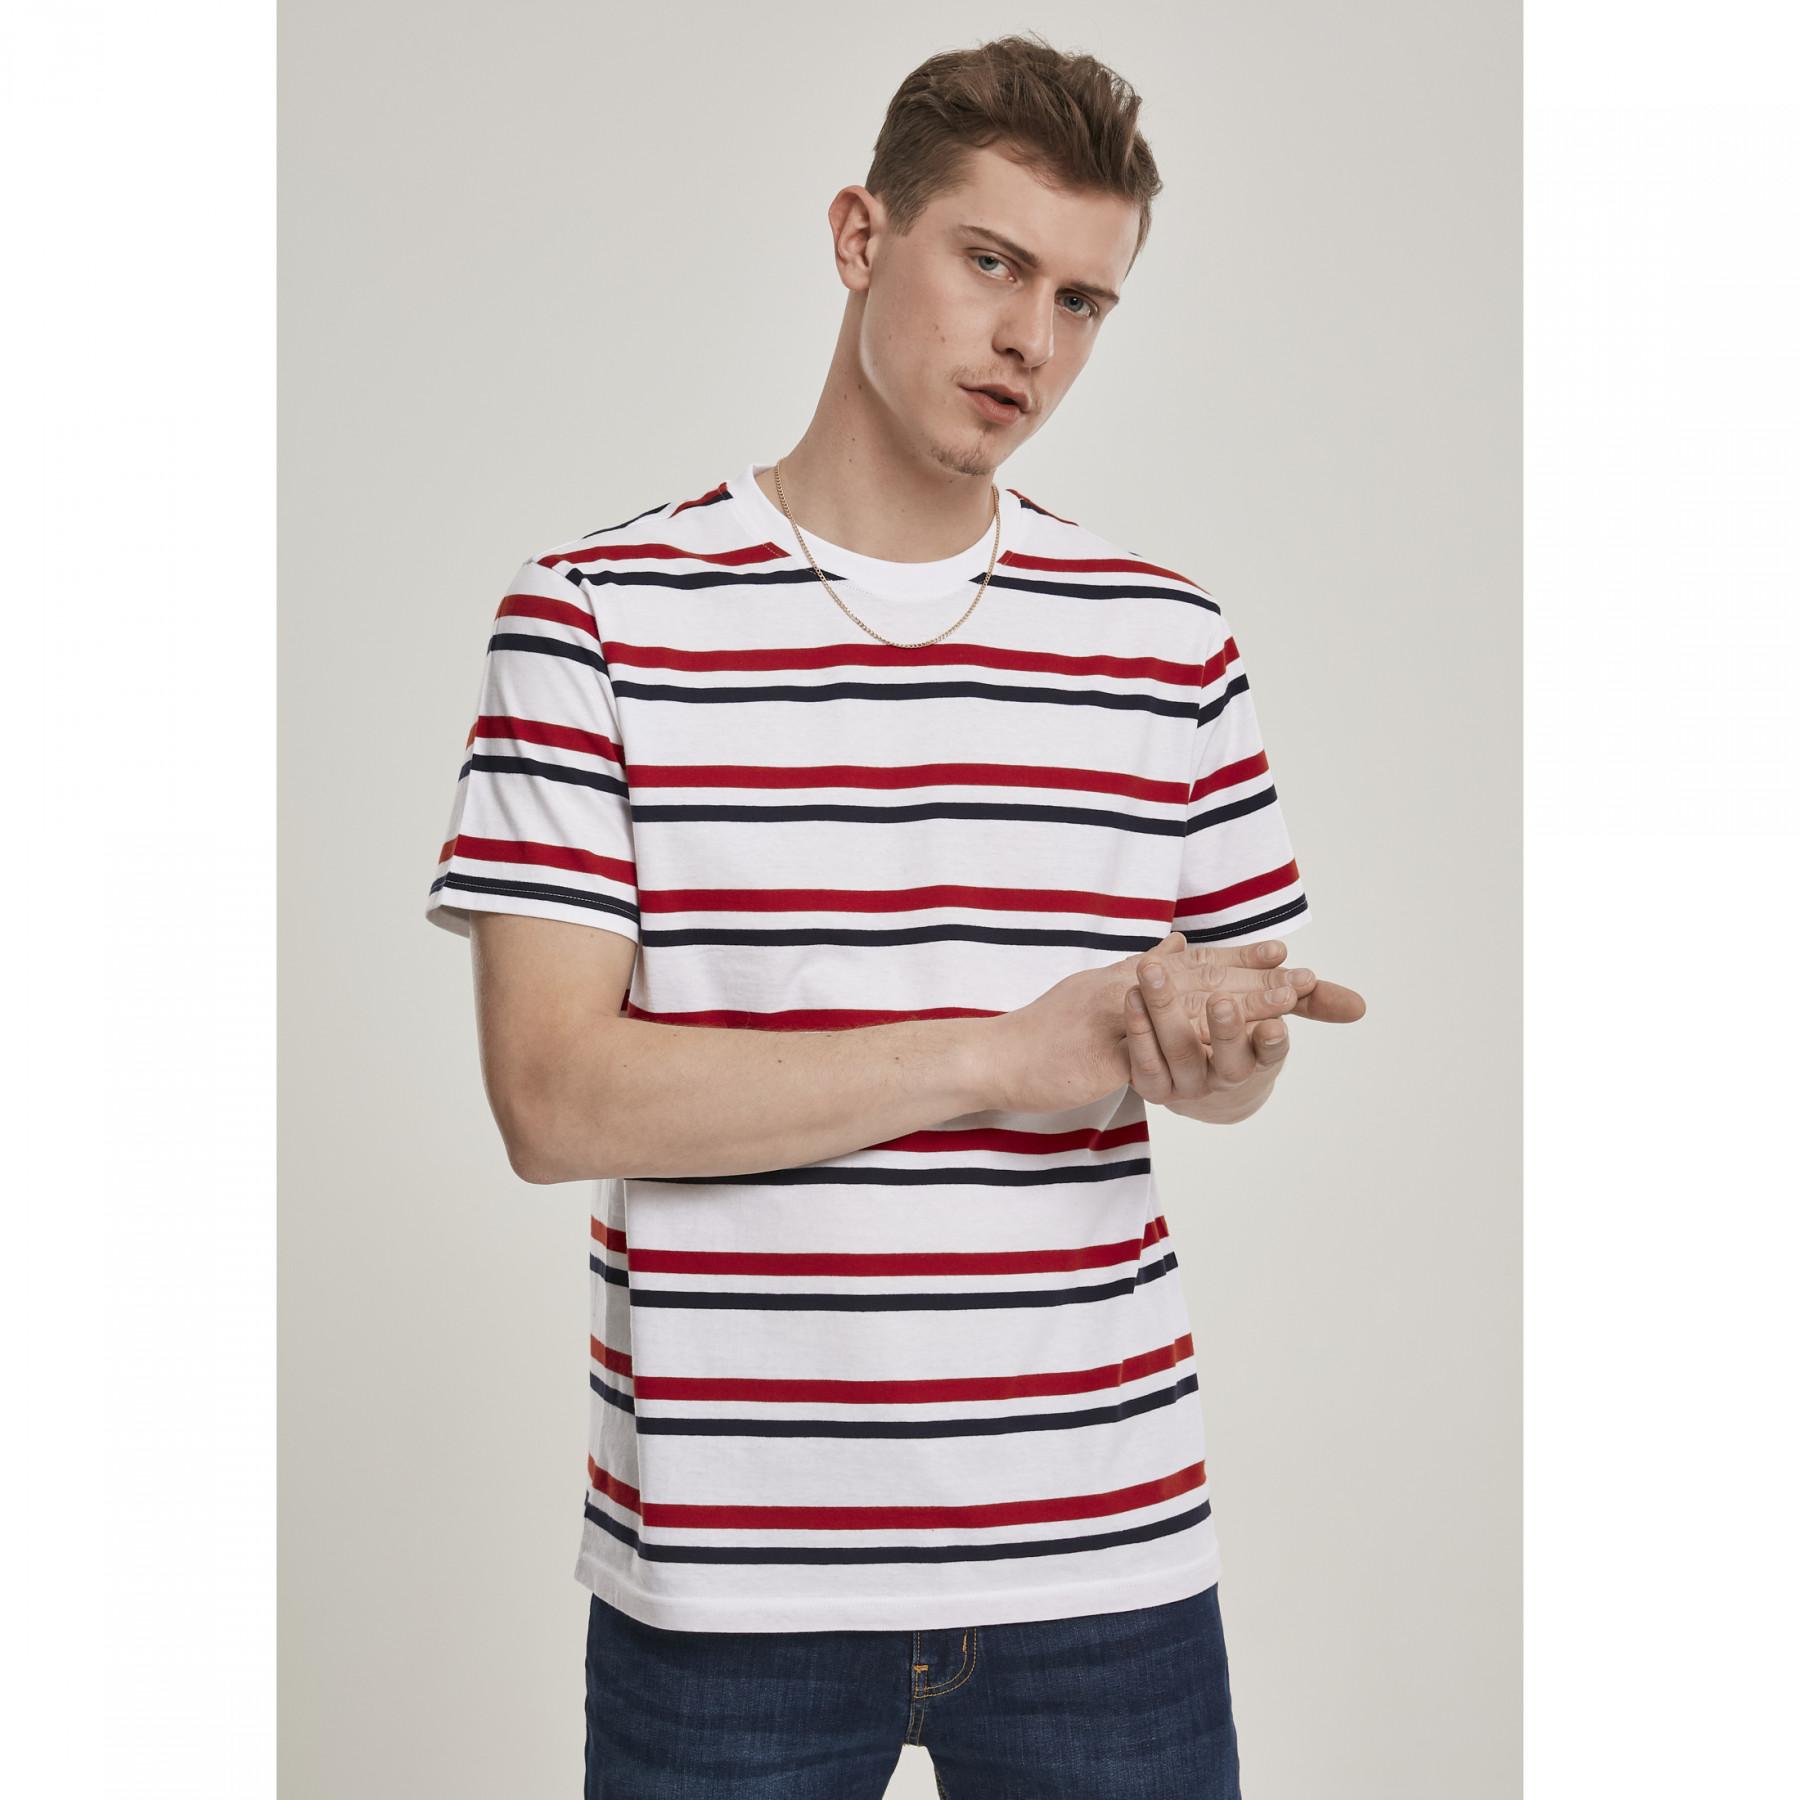 T-shirt urban classic yarn d kate stripe